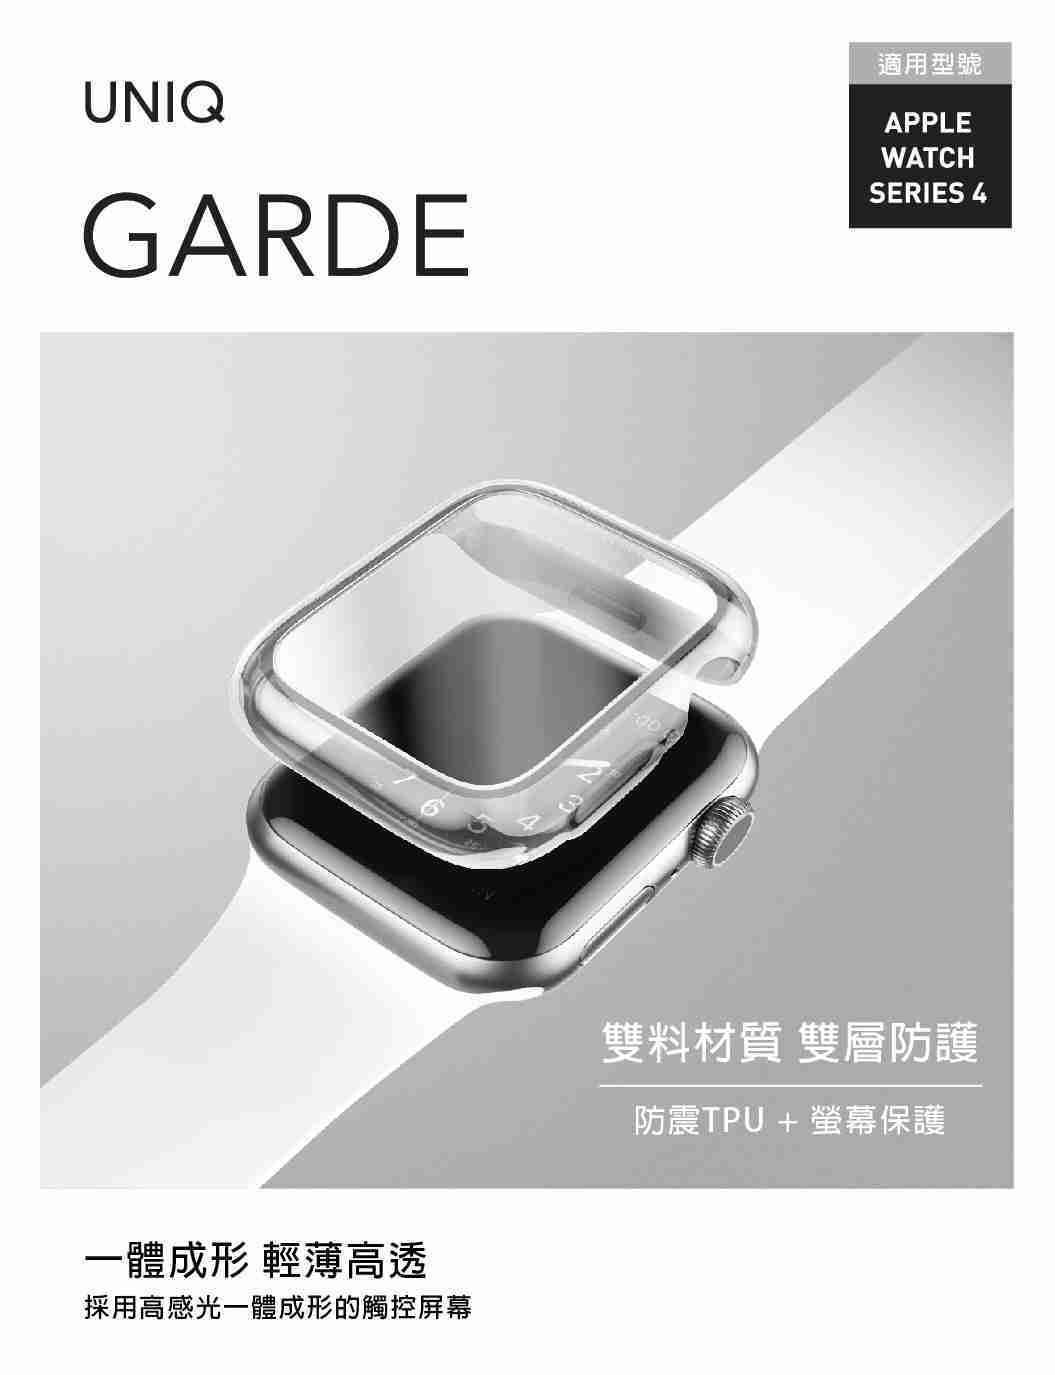 歐美銷售冠軍 Apple Watch 防撞保護框 UNIQ Garde 全包覆保護殼 透明保護殼 40mm 44mm